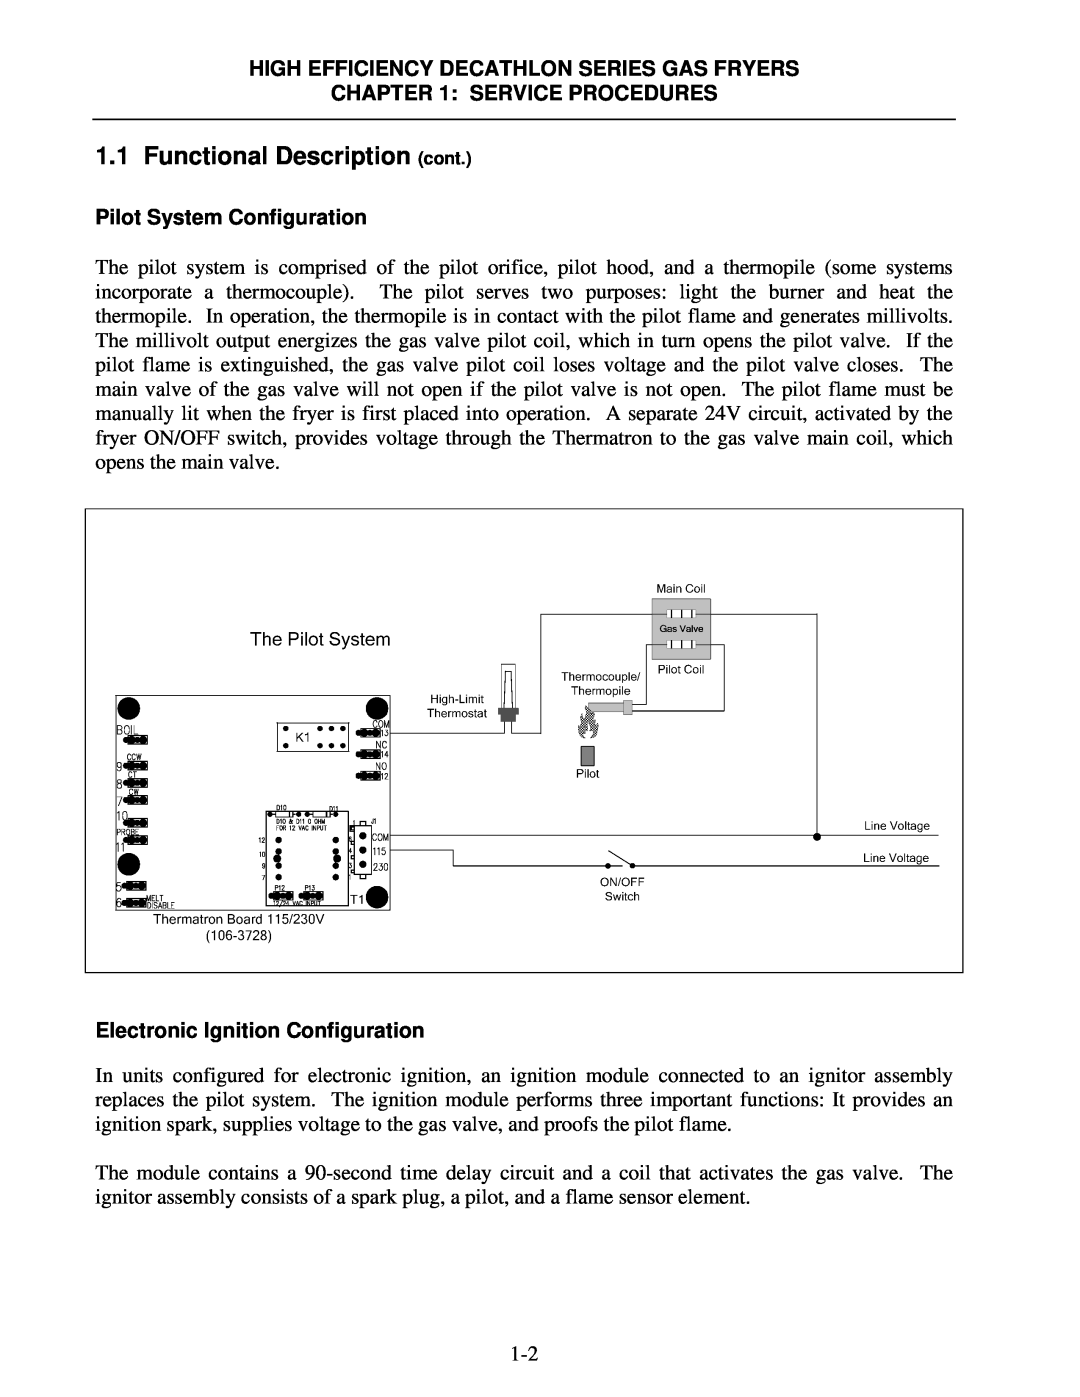 Frymaster FPHD manual Functional Description cont, High Efficiency Decathlon Series Gas Fryers, Service Procedures 